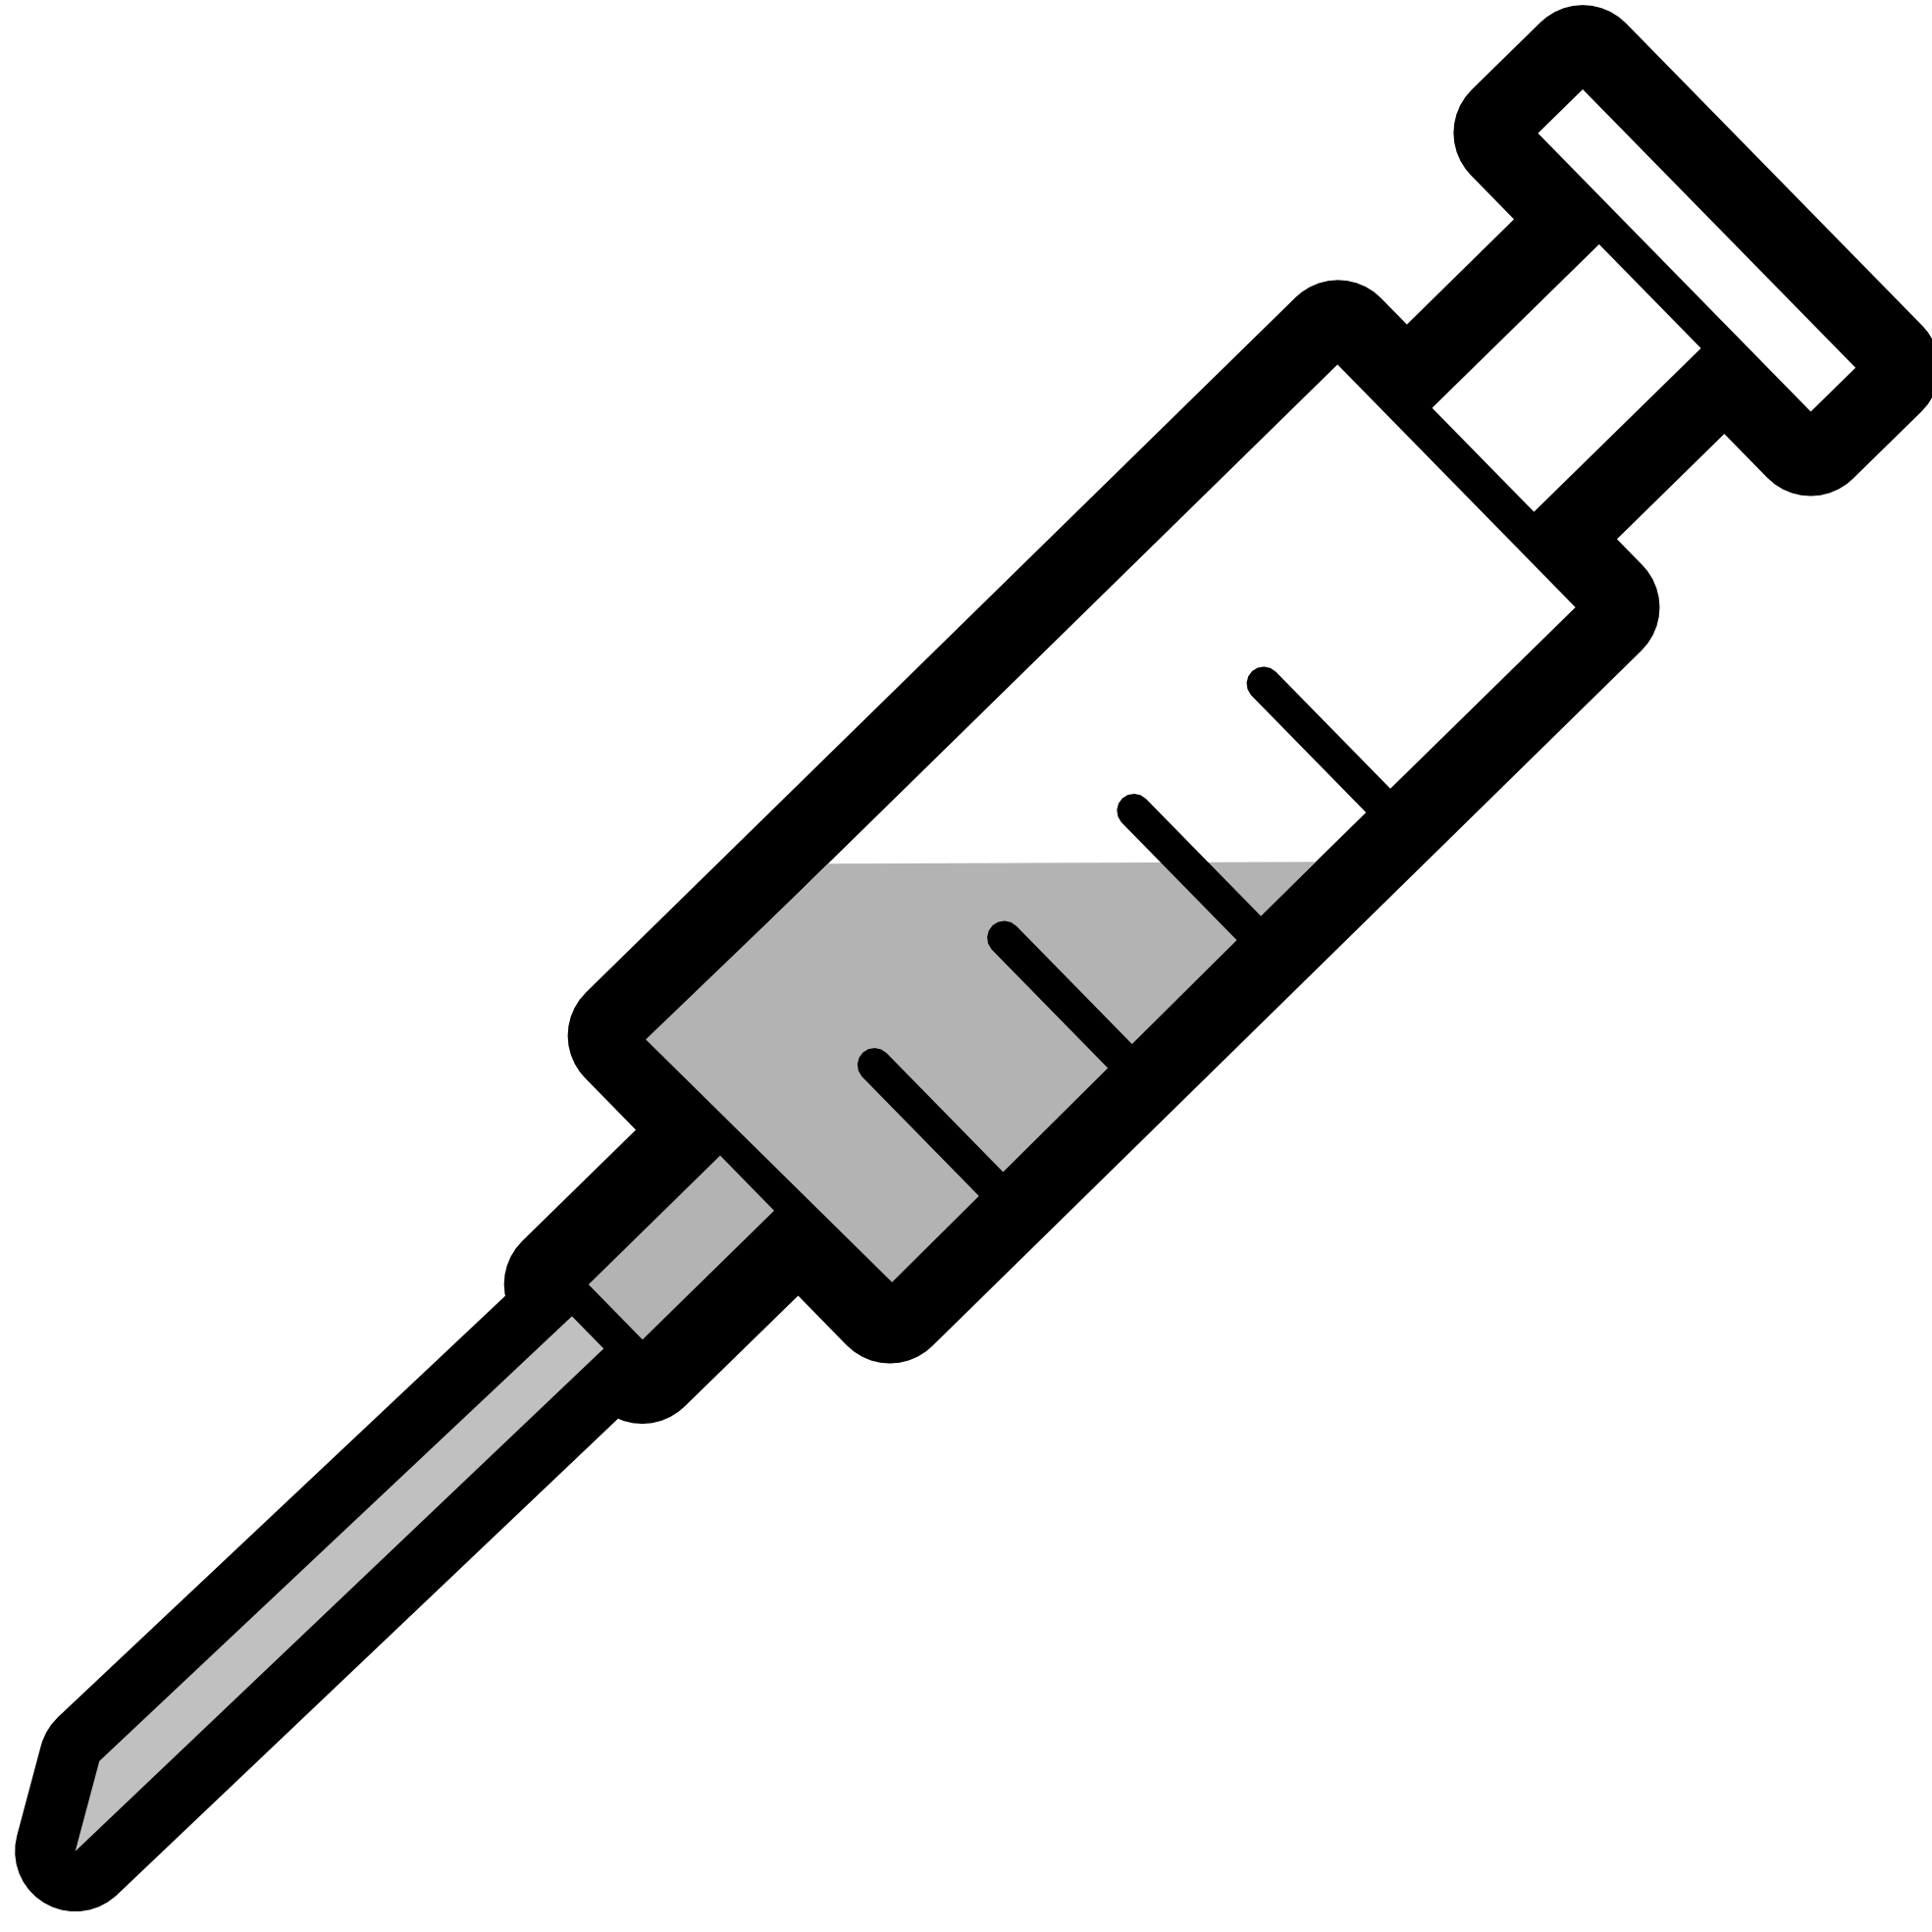 Medical syringe clipart free clipart image